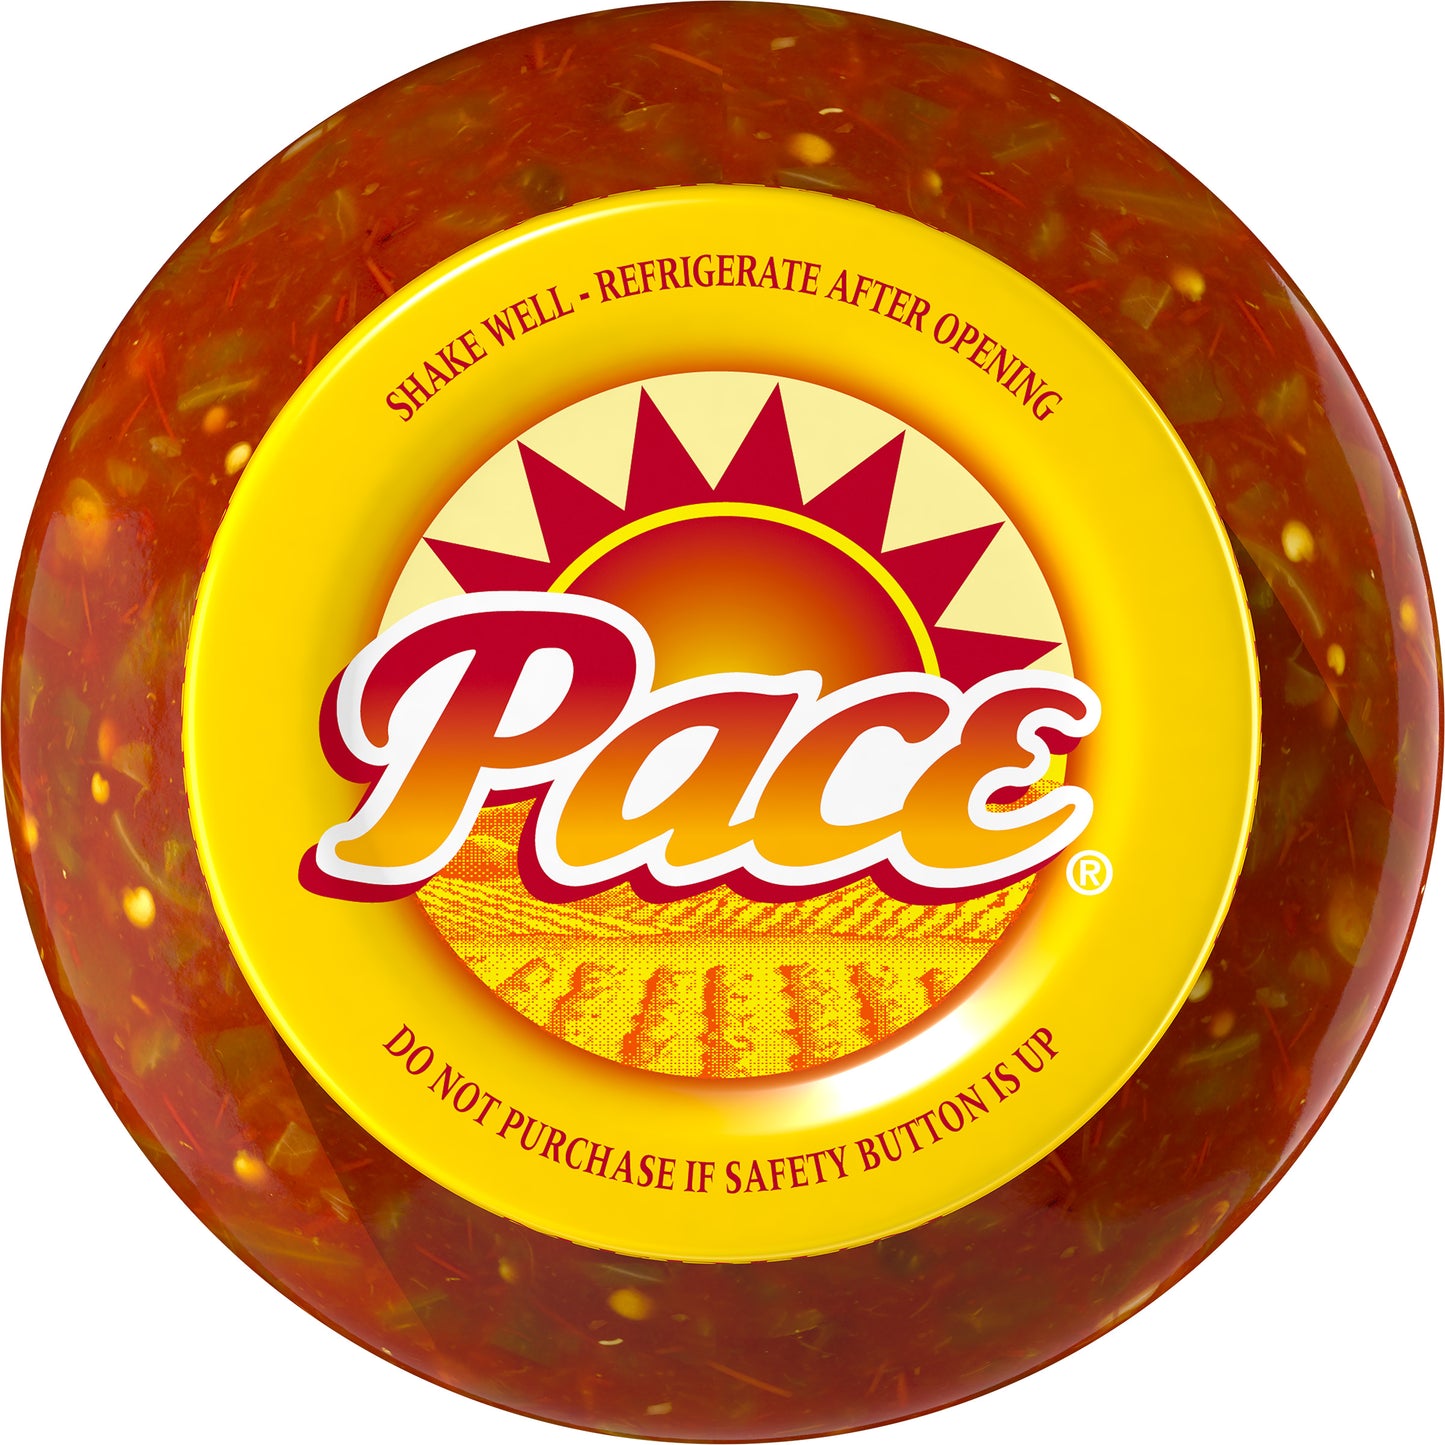 Pace Medium Picante Sauce, 16 oz.